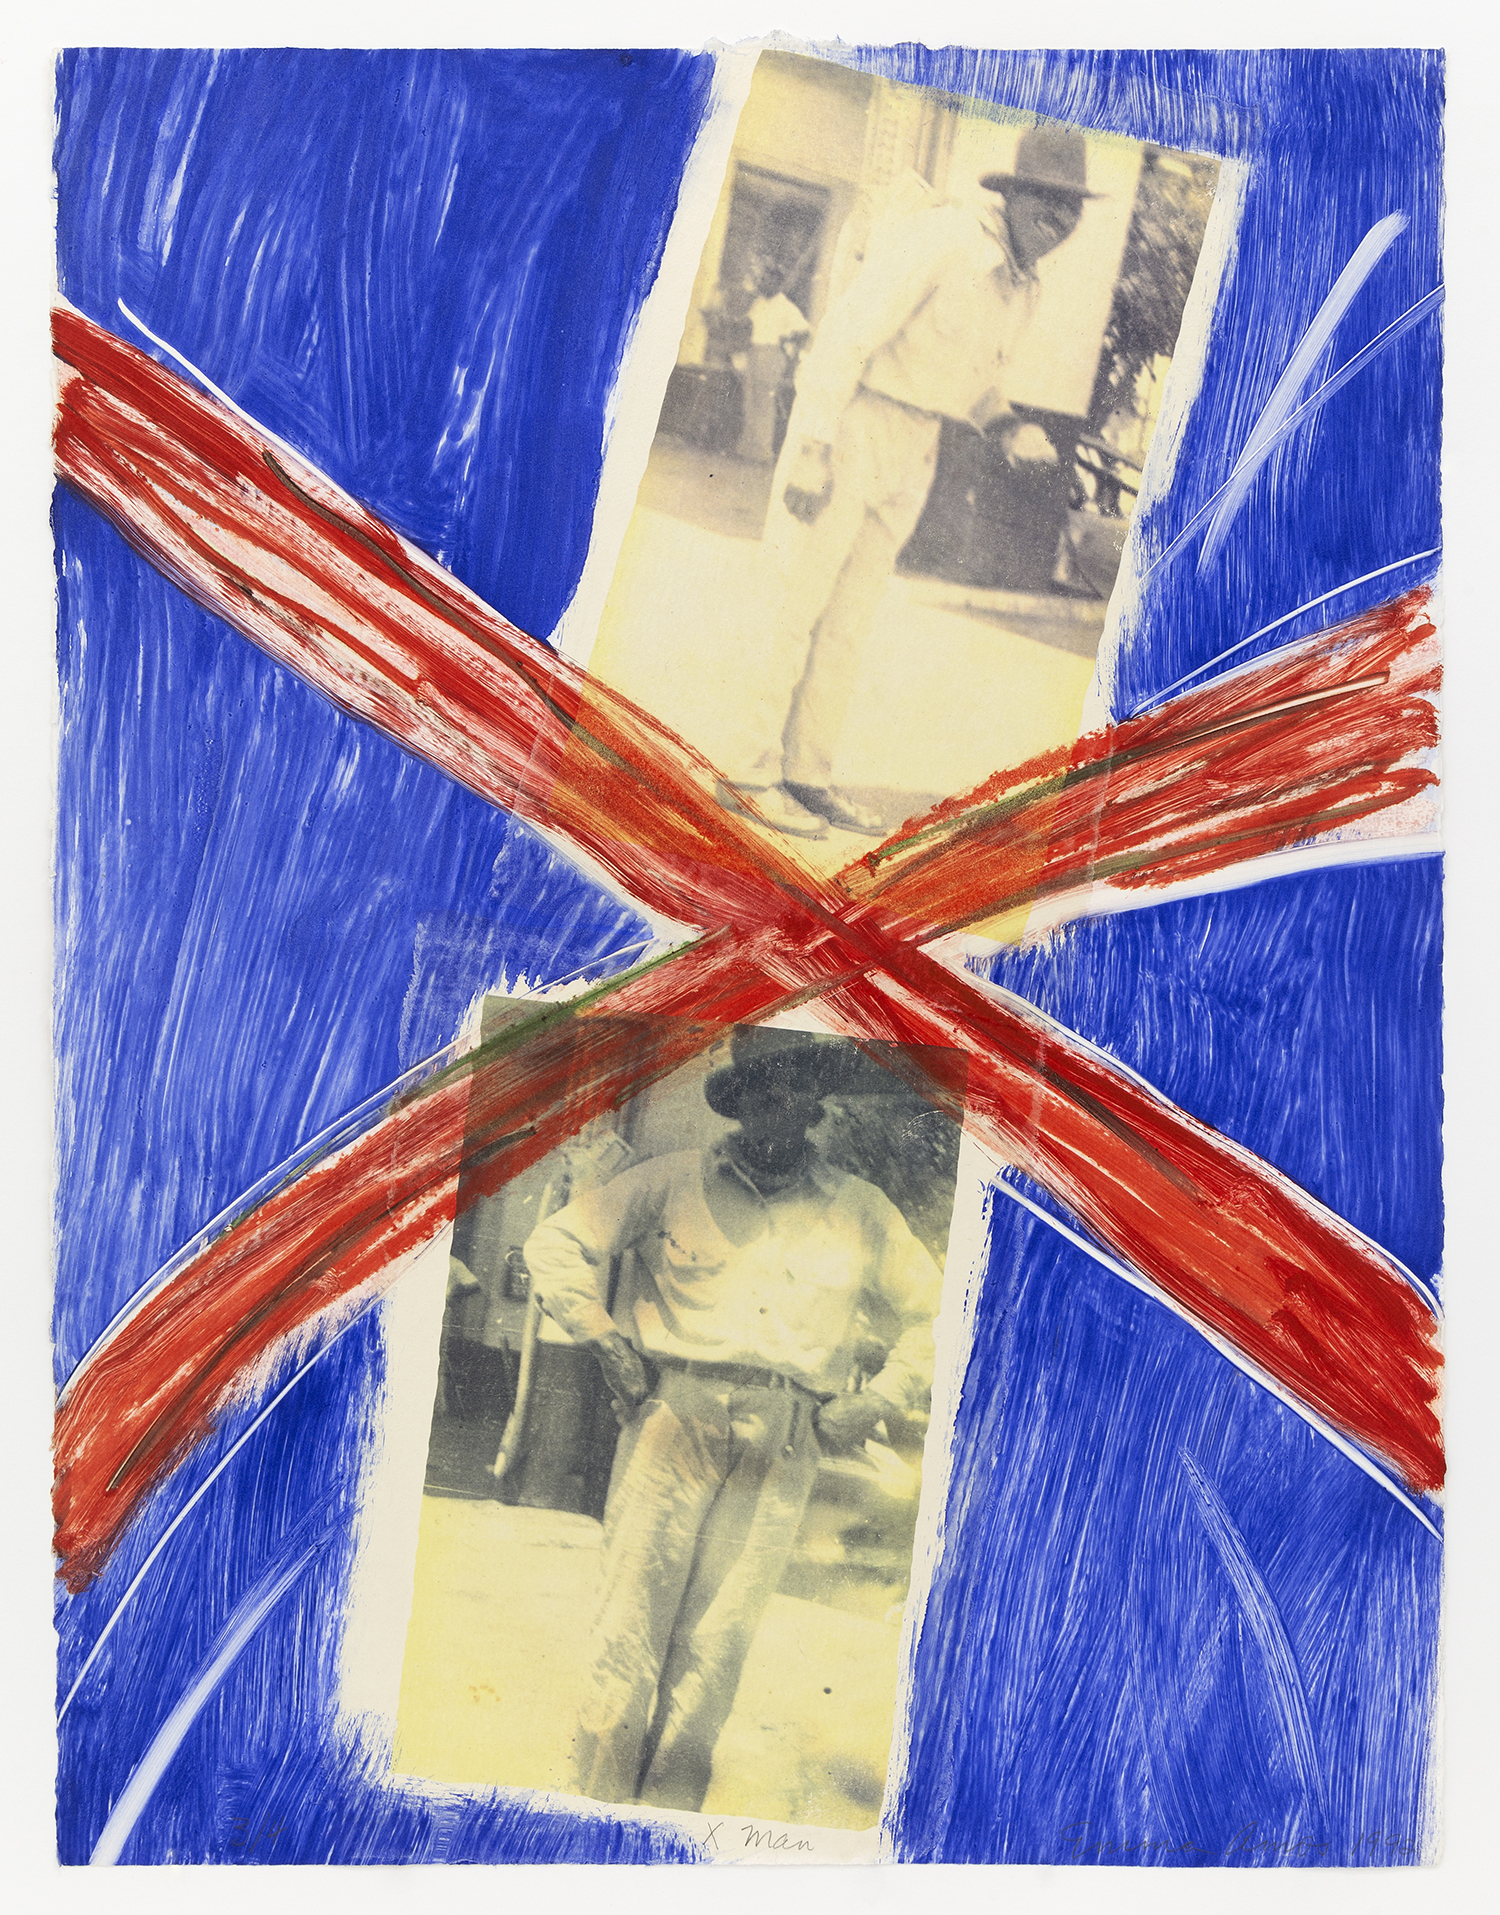 X Man, 1992, Monoprint/photo, 30 x 22 inches (76.2 x 55.9 cm), Edition of 4